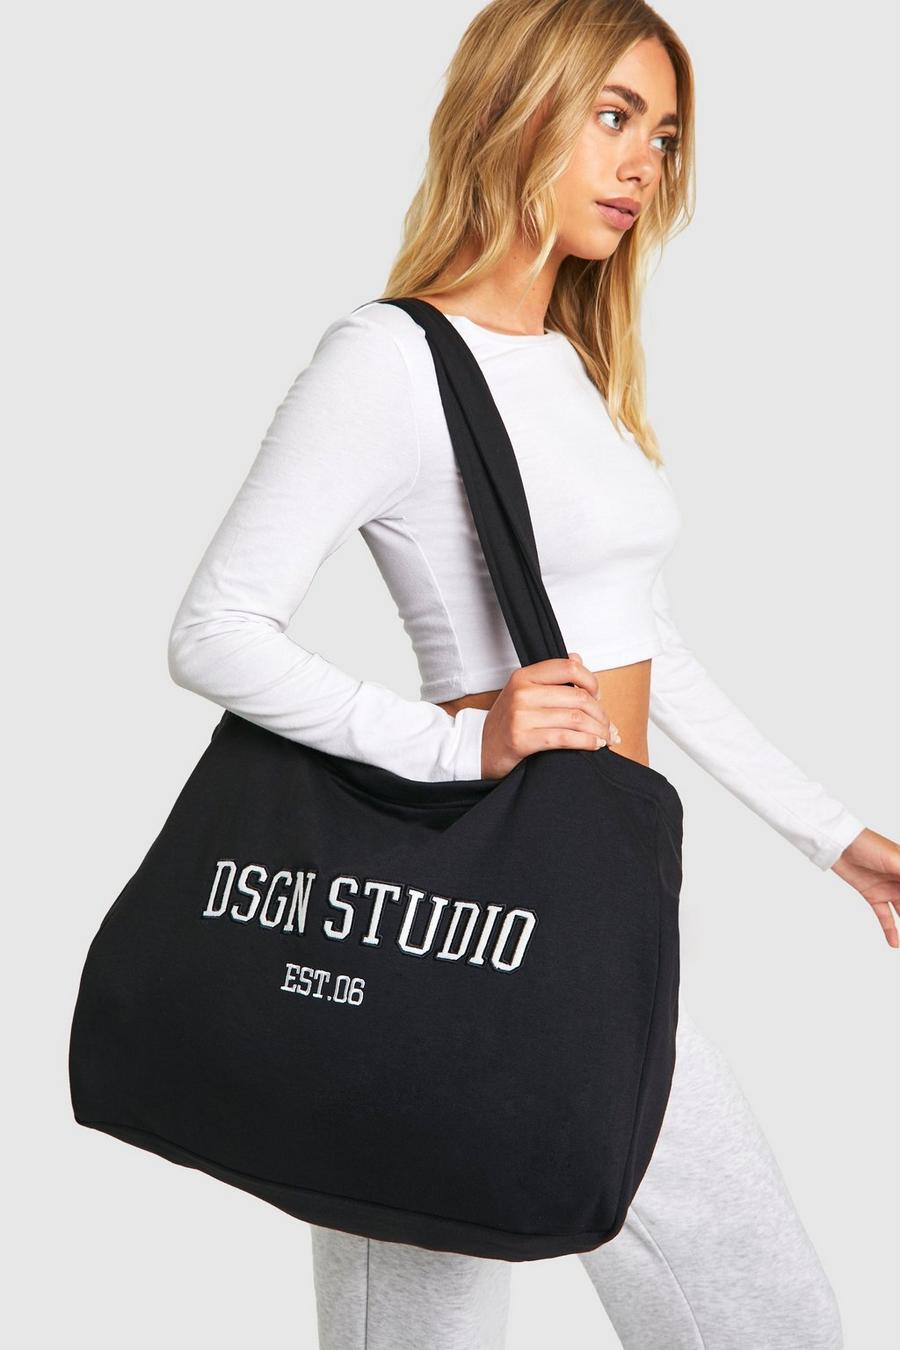 Black Applique Dsgn Studio Tote Bag